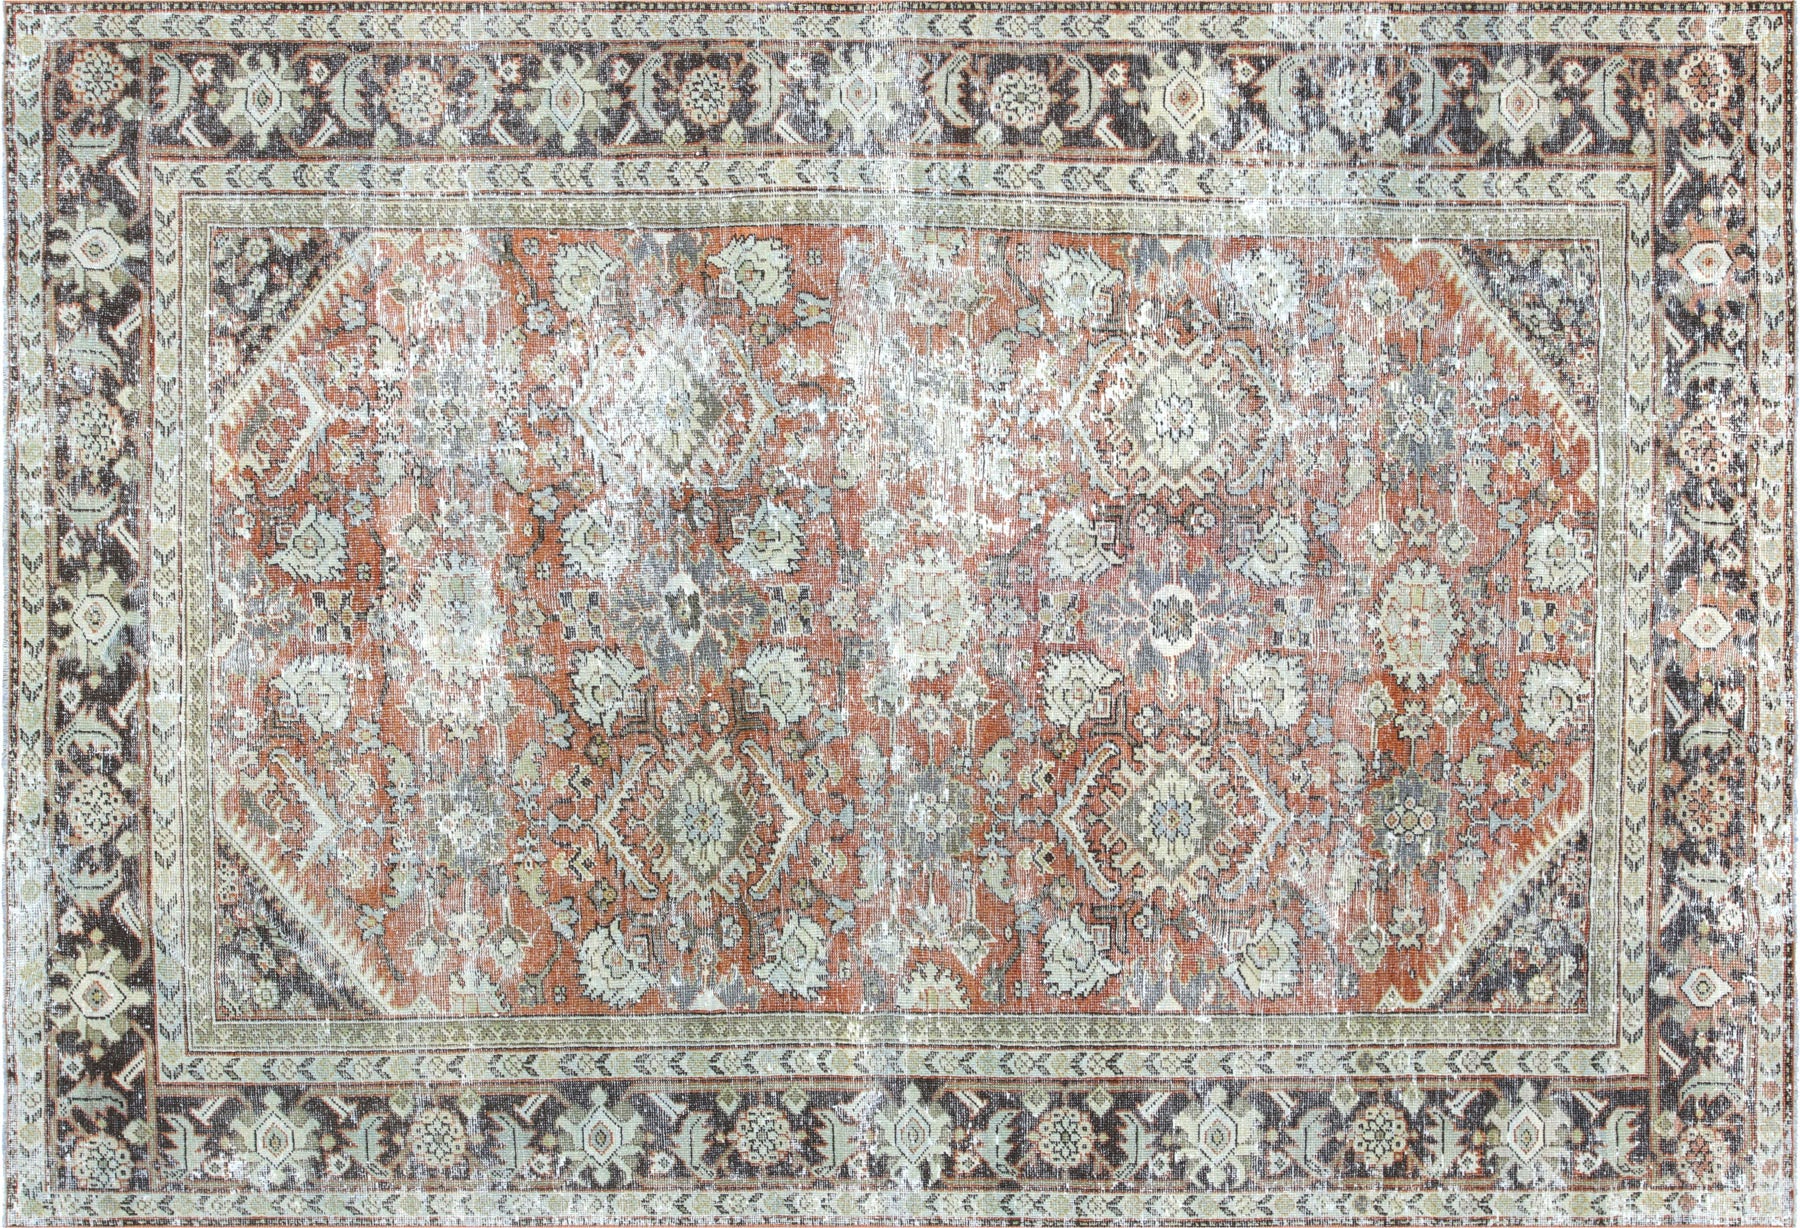 Vintage Persian Mahal Rug - 7' x 10'4"